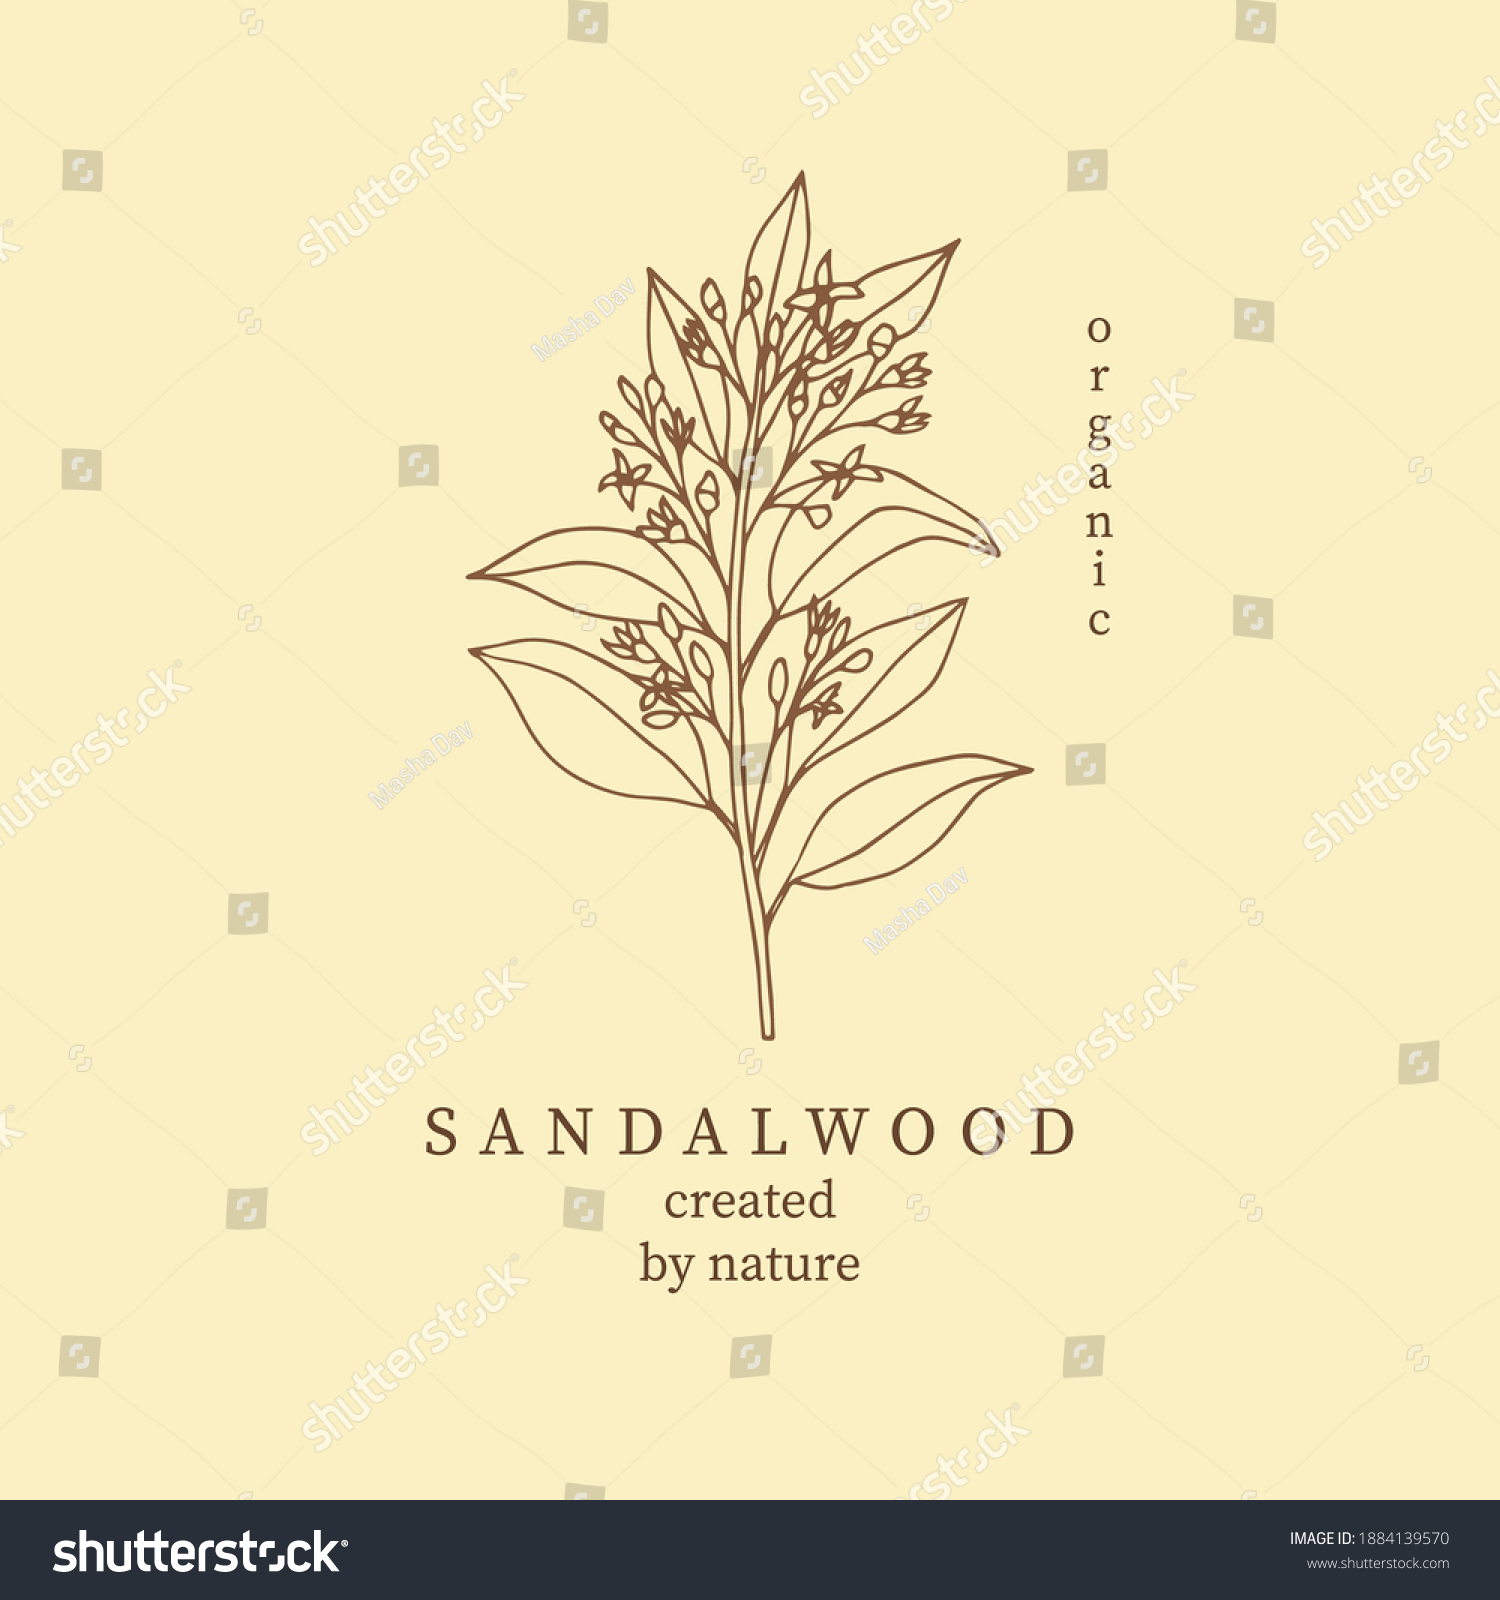 Sandalwood vector illustration. Botanical design #1884139570